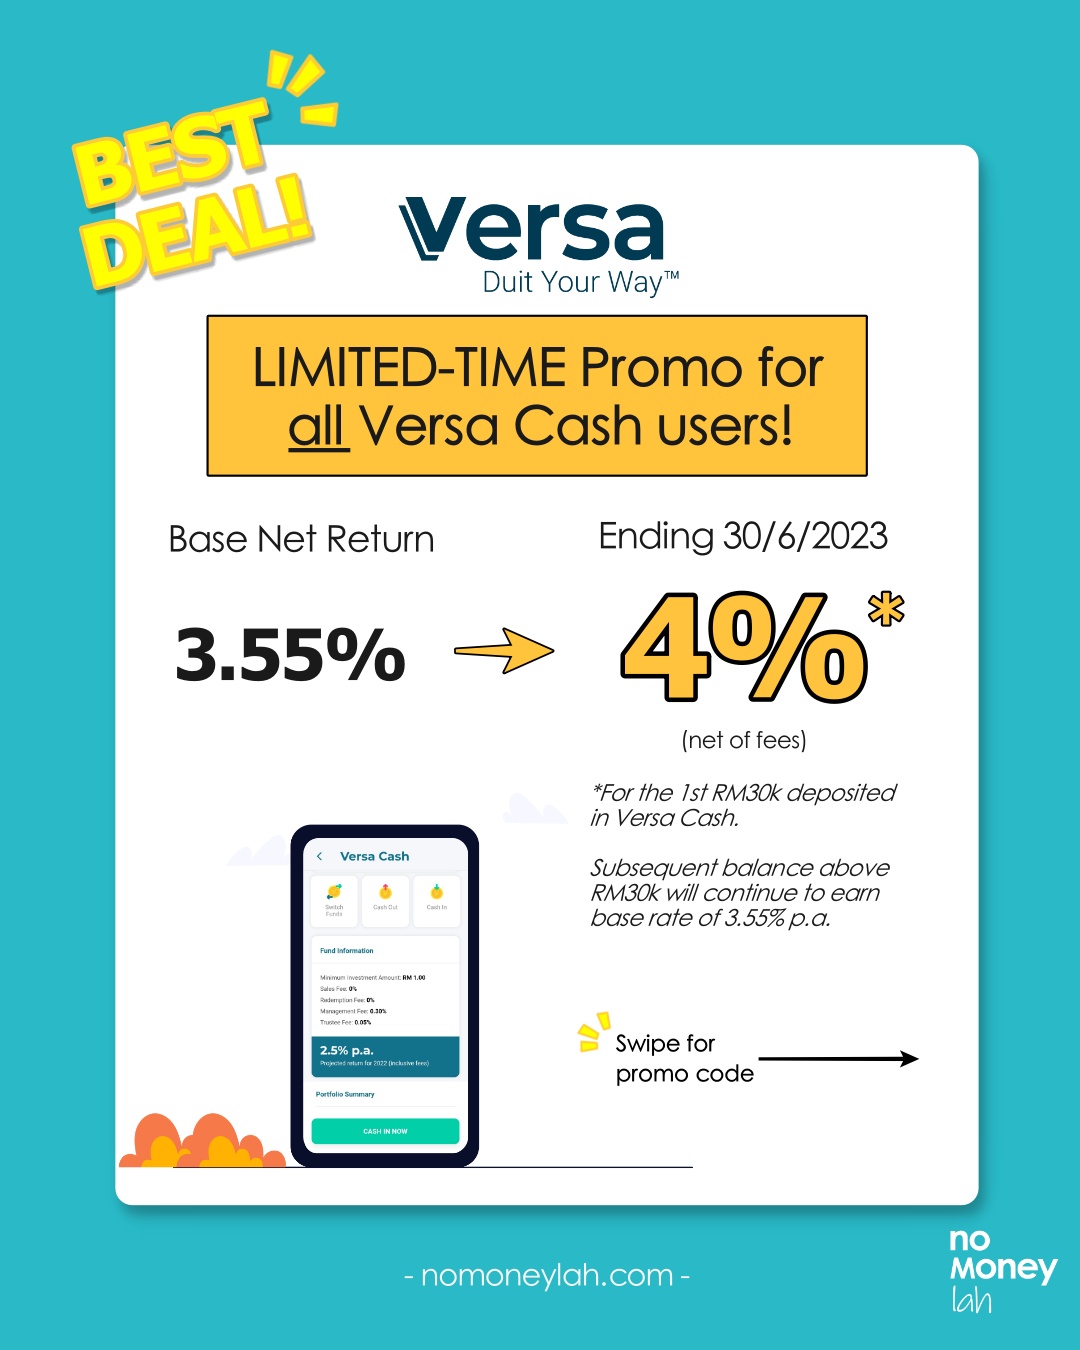 Versa Cash 4% promo rate